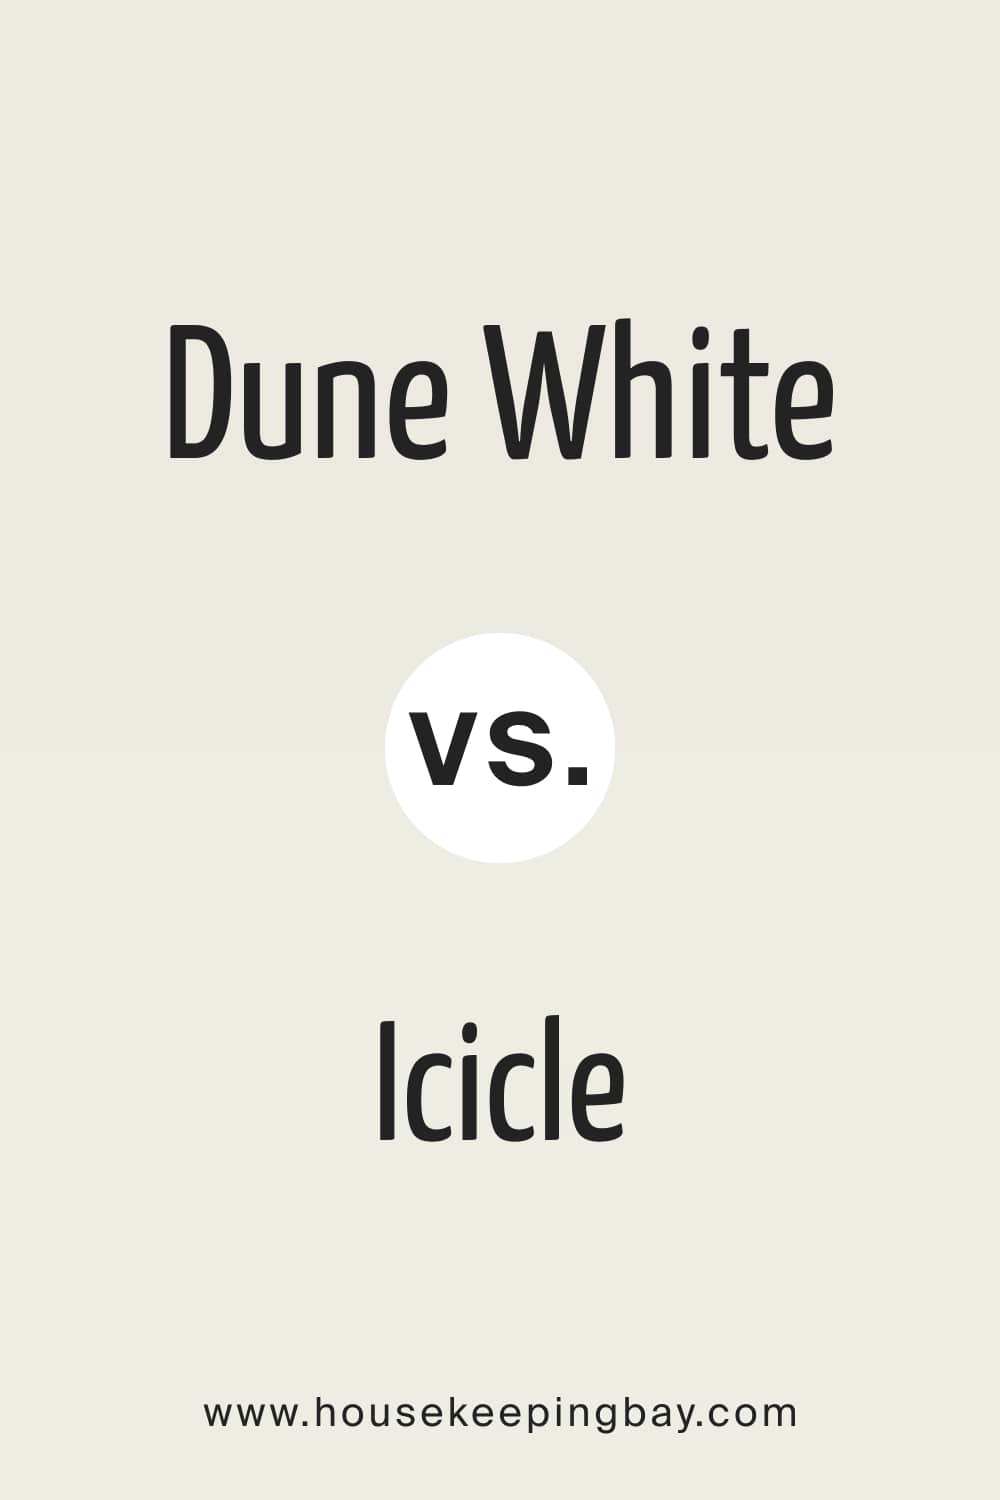 Dune White vs Icicle